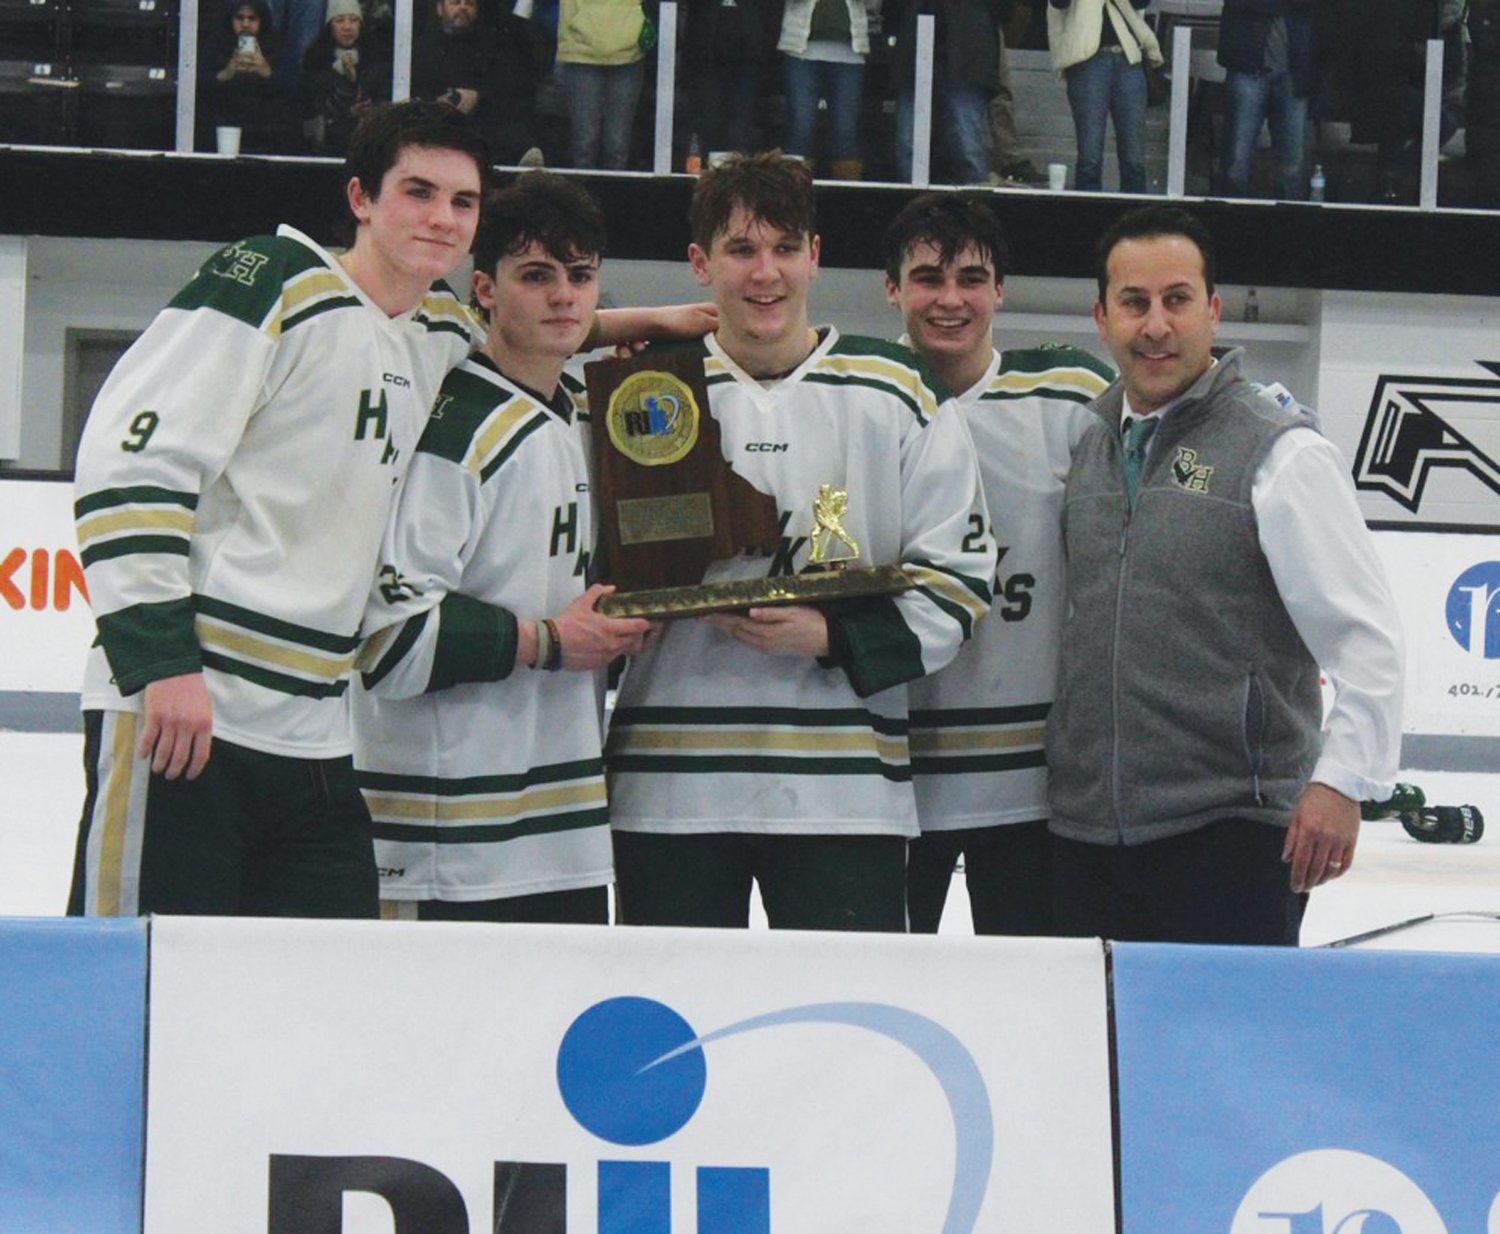 THREE STRAIGHT: The Bishop Hendricken hockey team after winning the state championship. (Photos by Alex Sponseller)